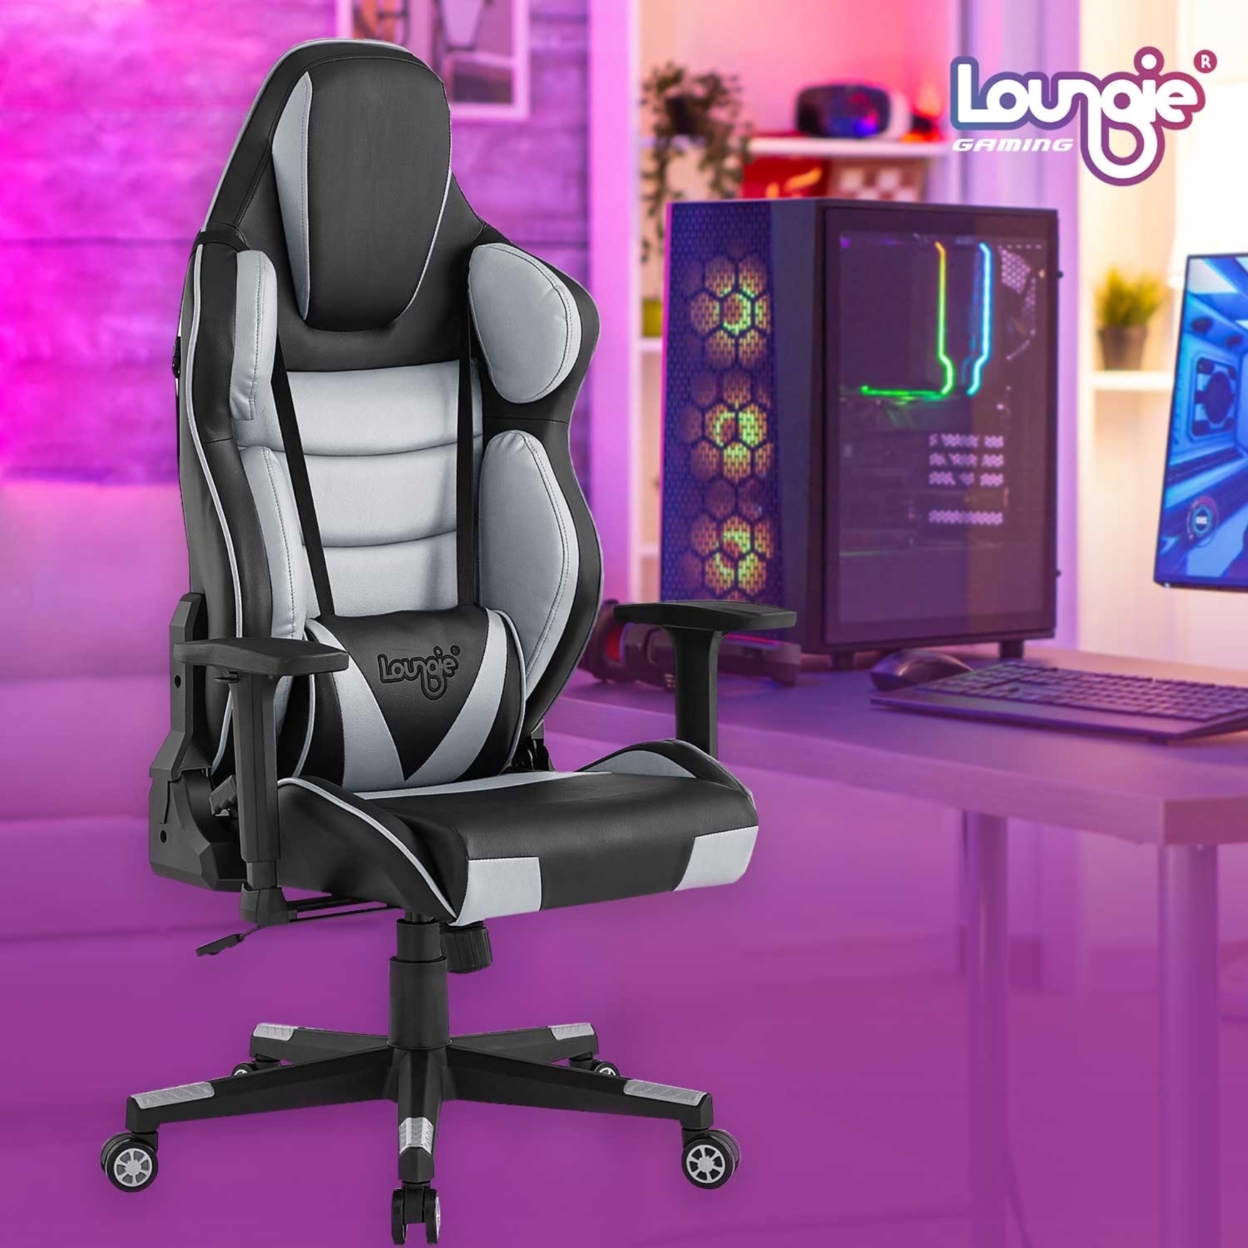 Kiya Game Chair-Swivel, Adjustable Back Angle, Seat Height and Armrest-Big Headrest, 360 Degree Rotation-Lumbar Support Cushion - grey